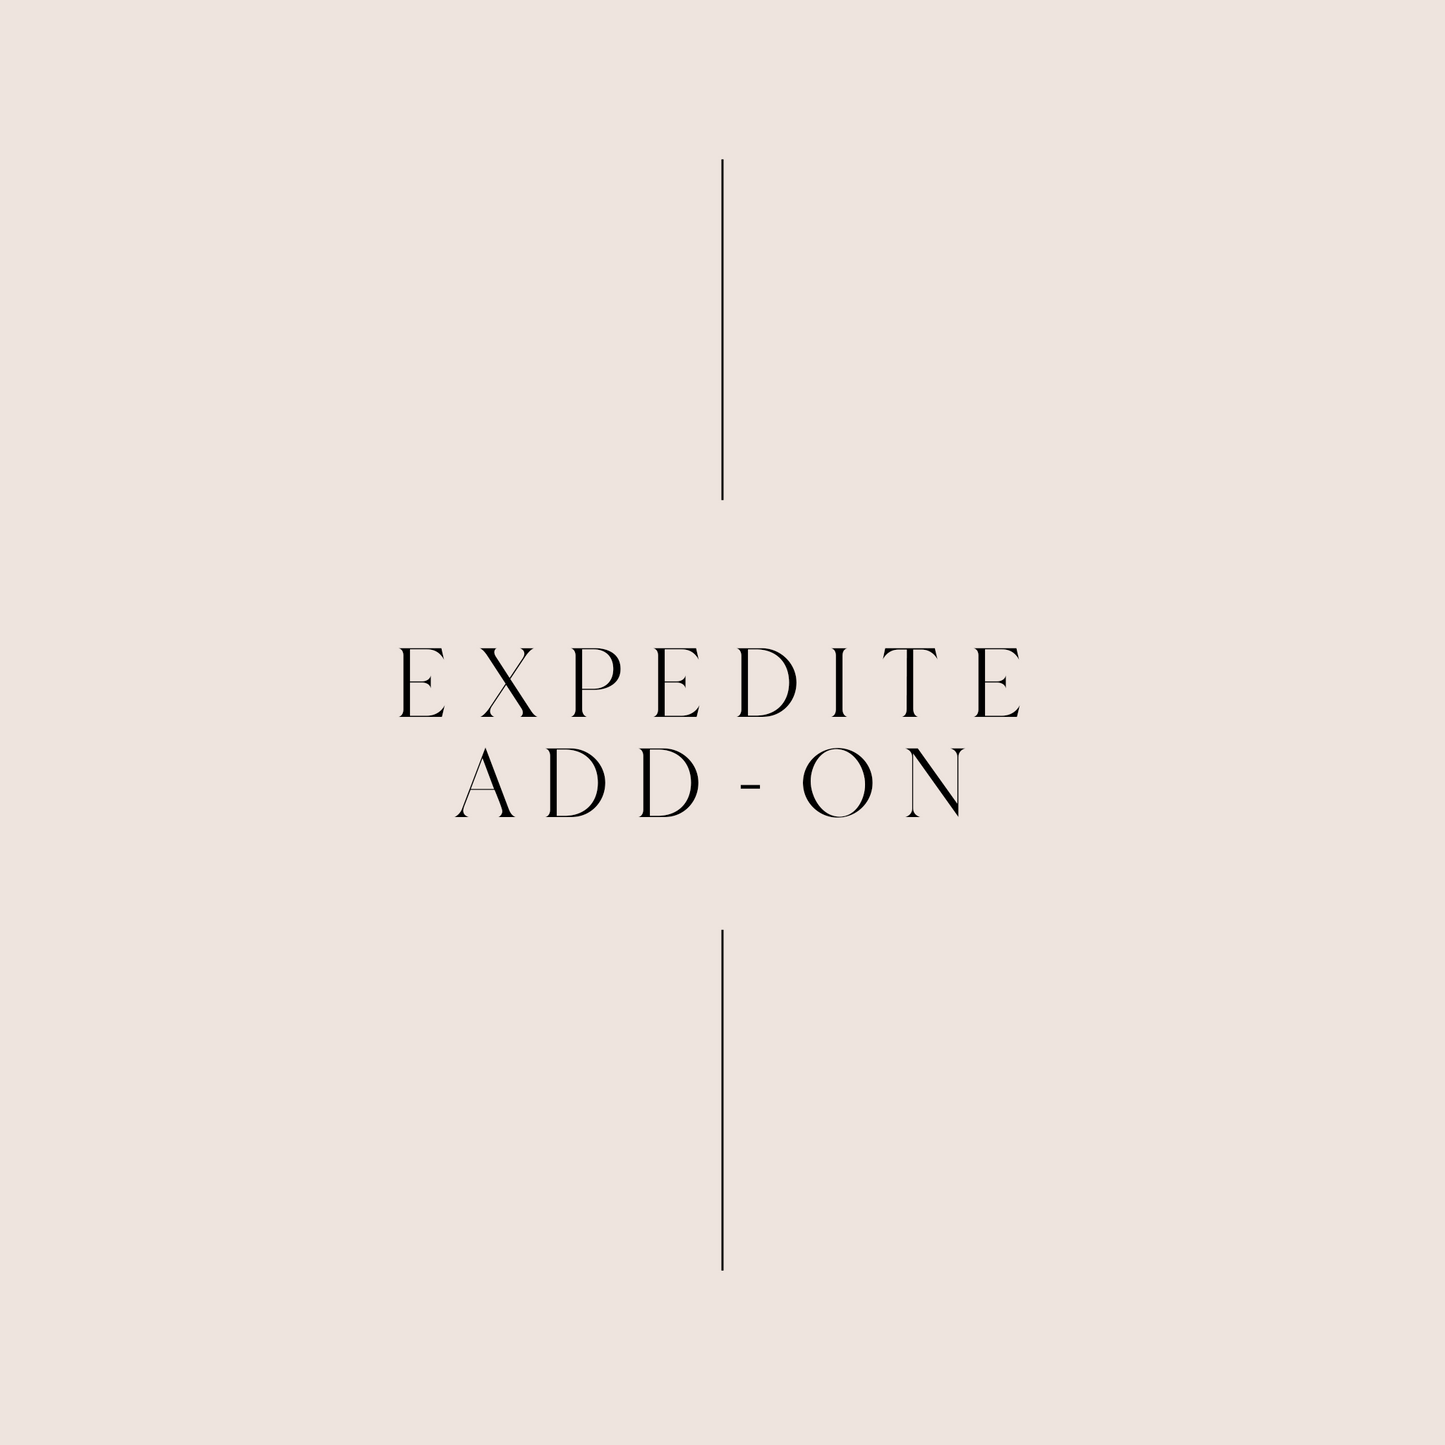 Expedite Add-On